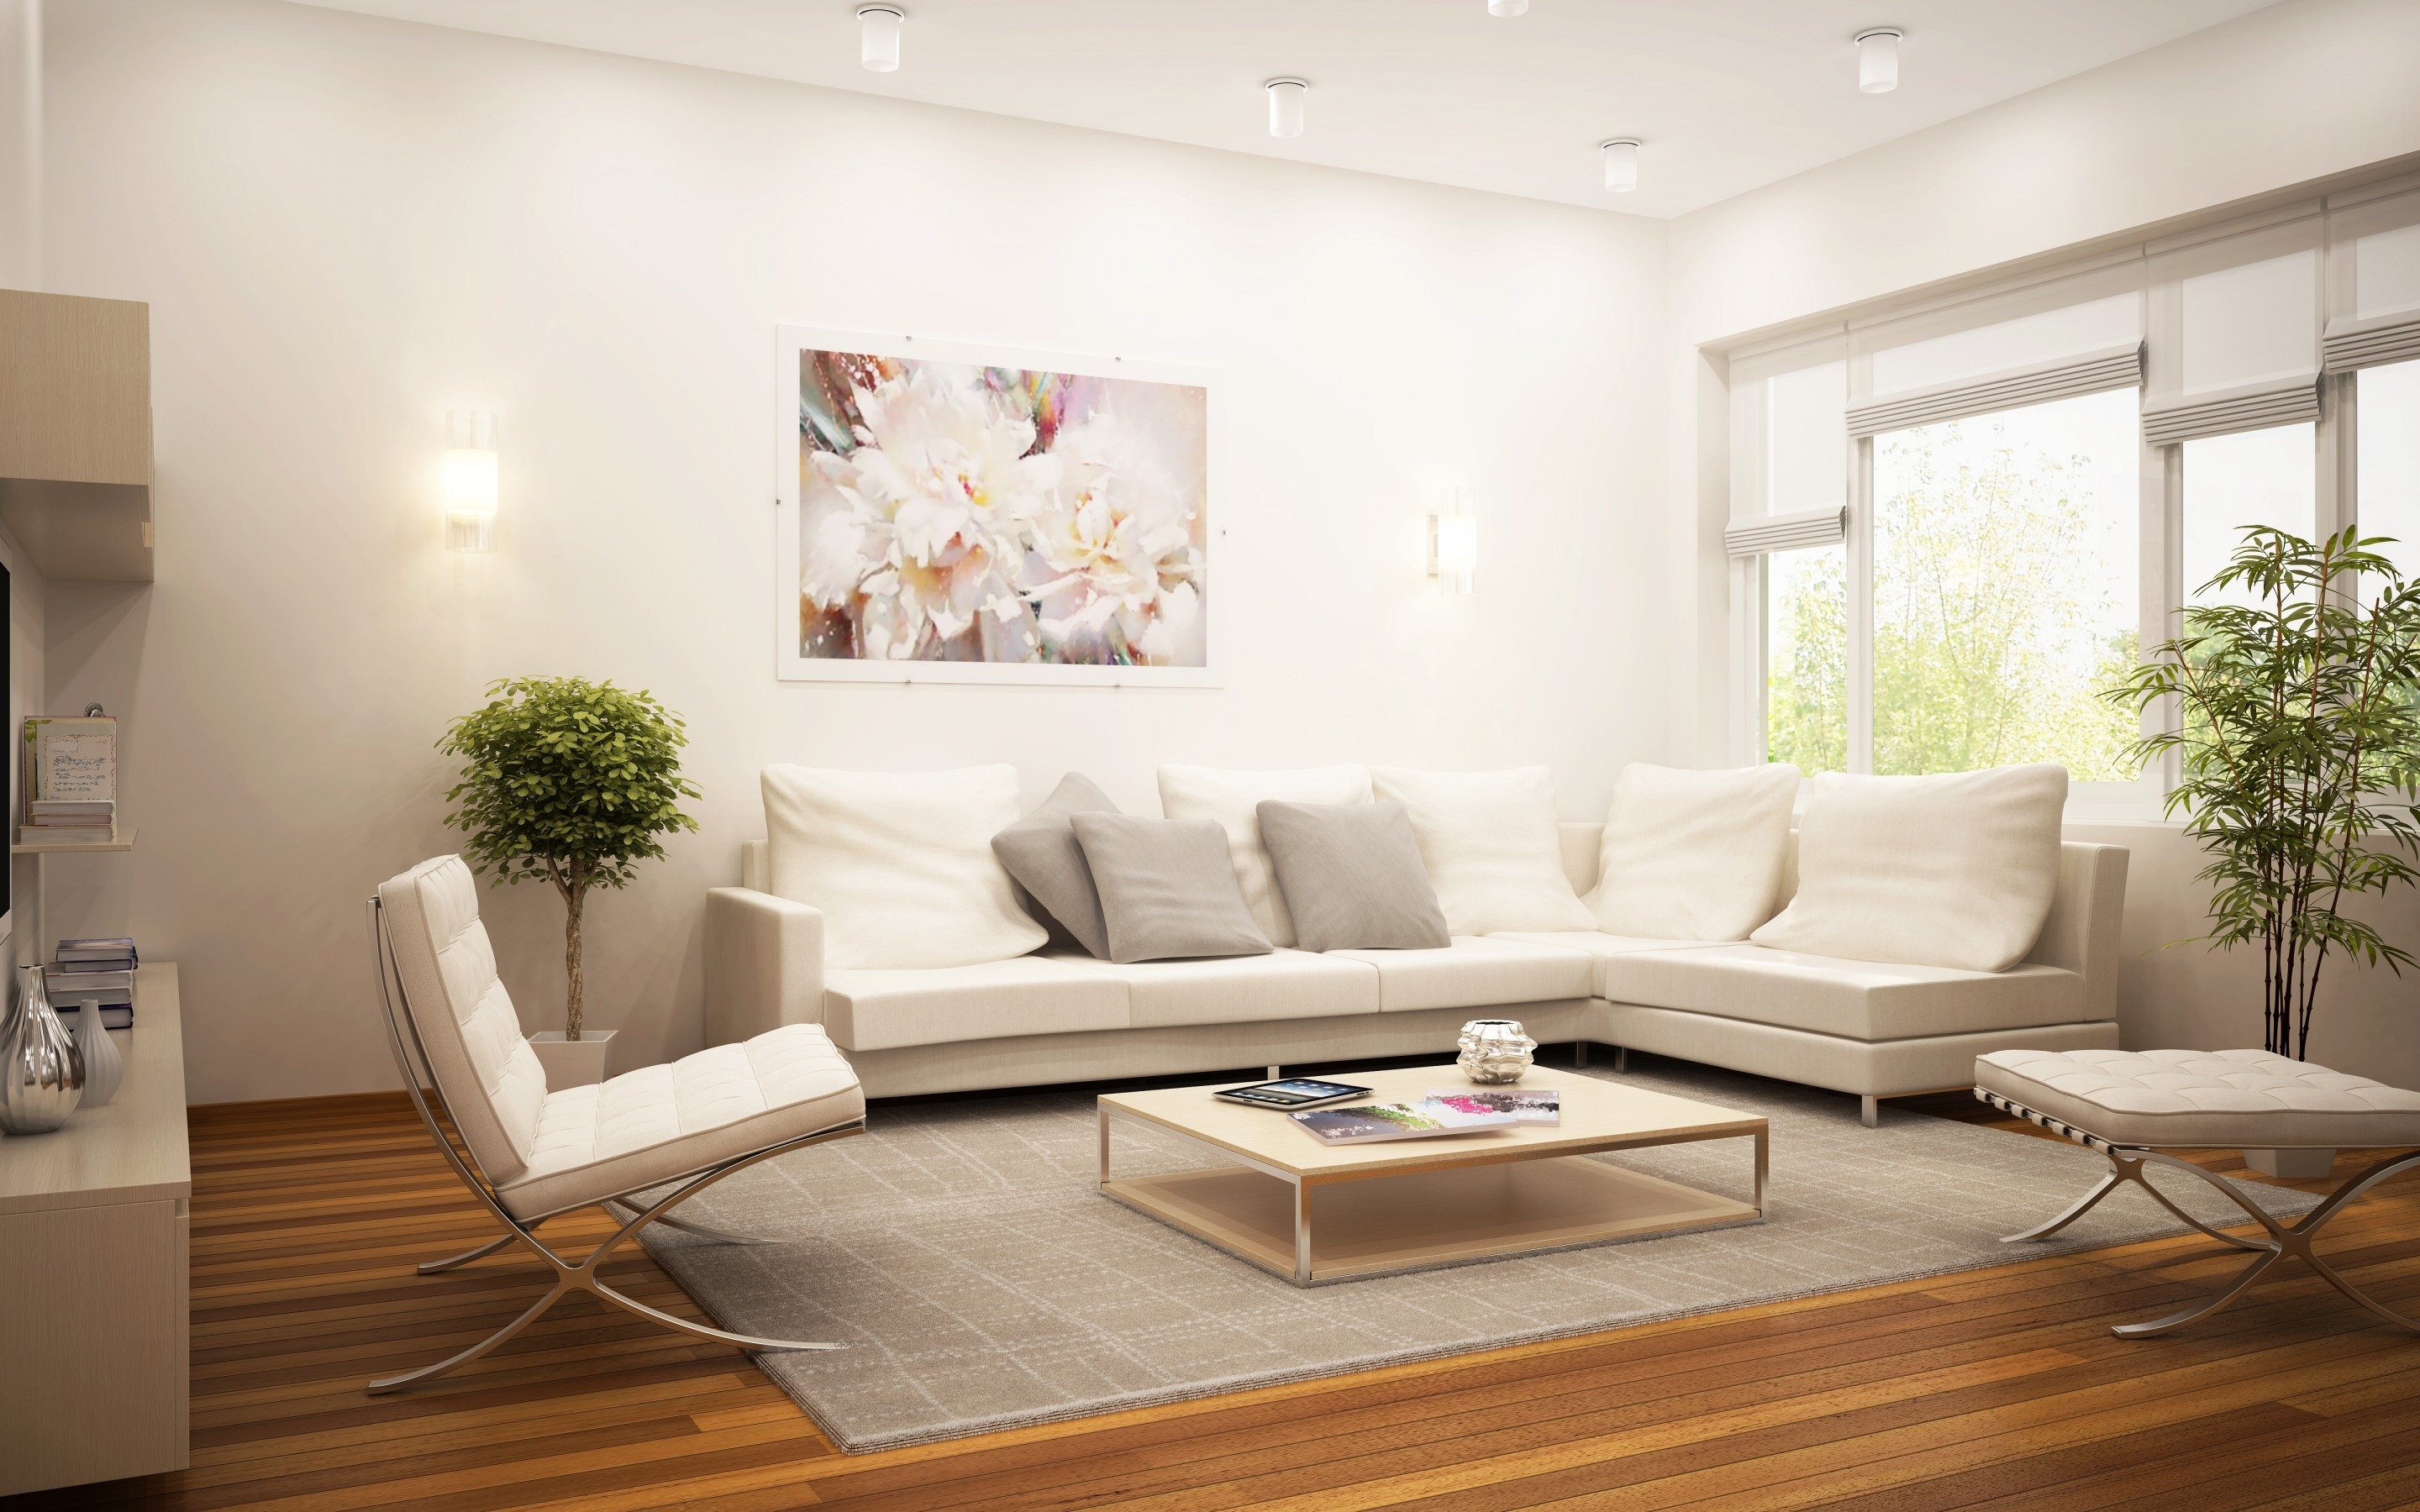 Fabulous Living Room for 2880 x 1800 Retina Display resolution